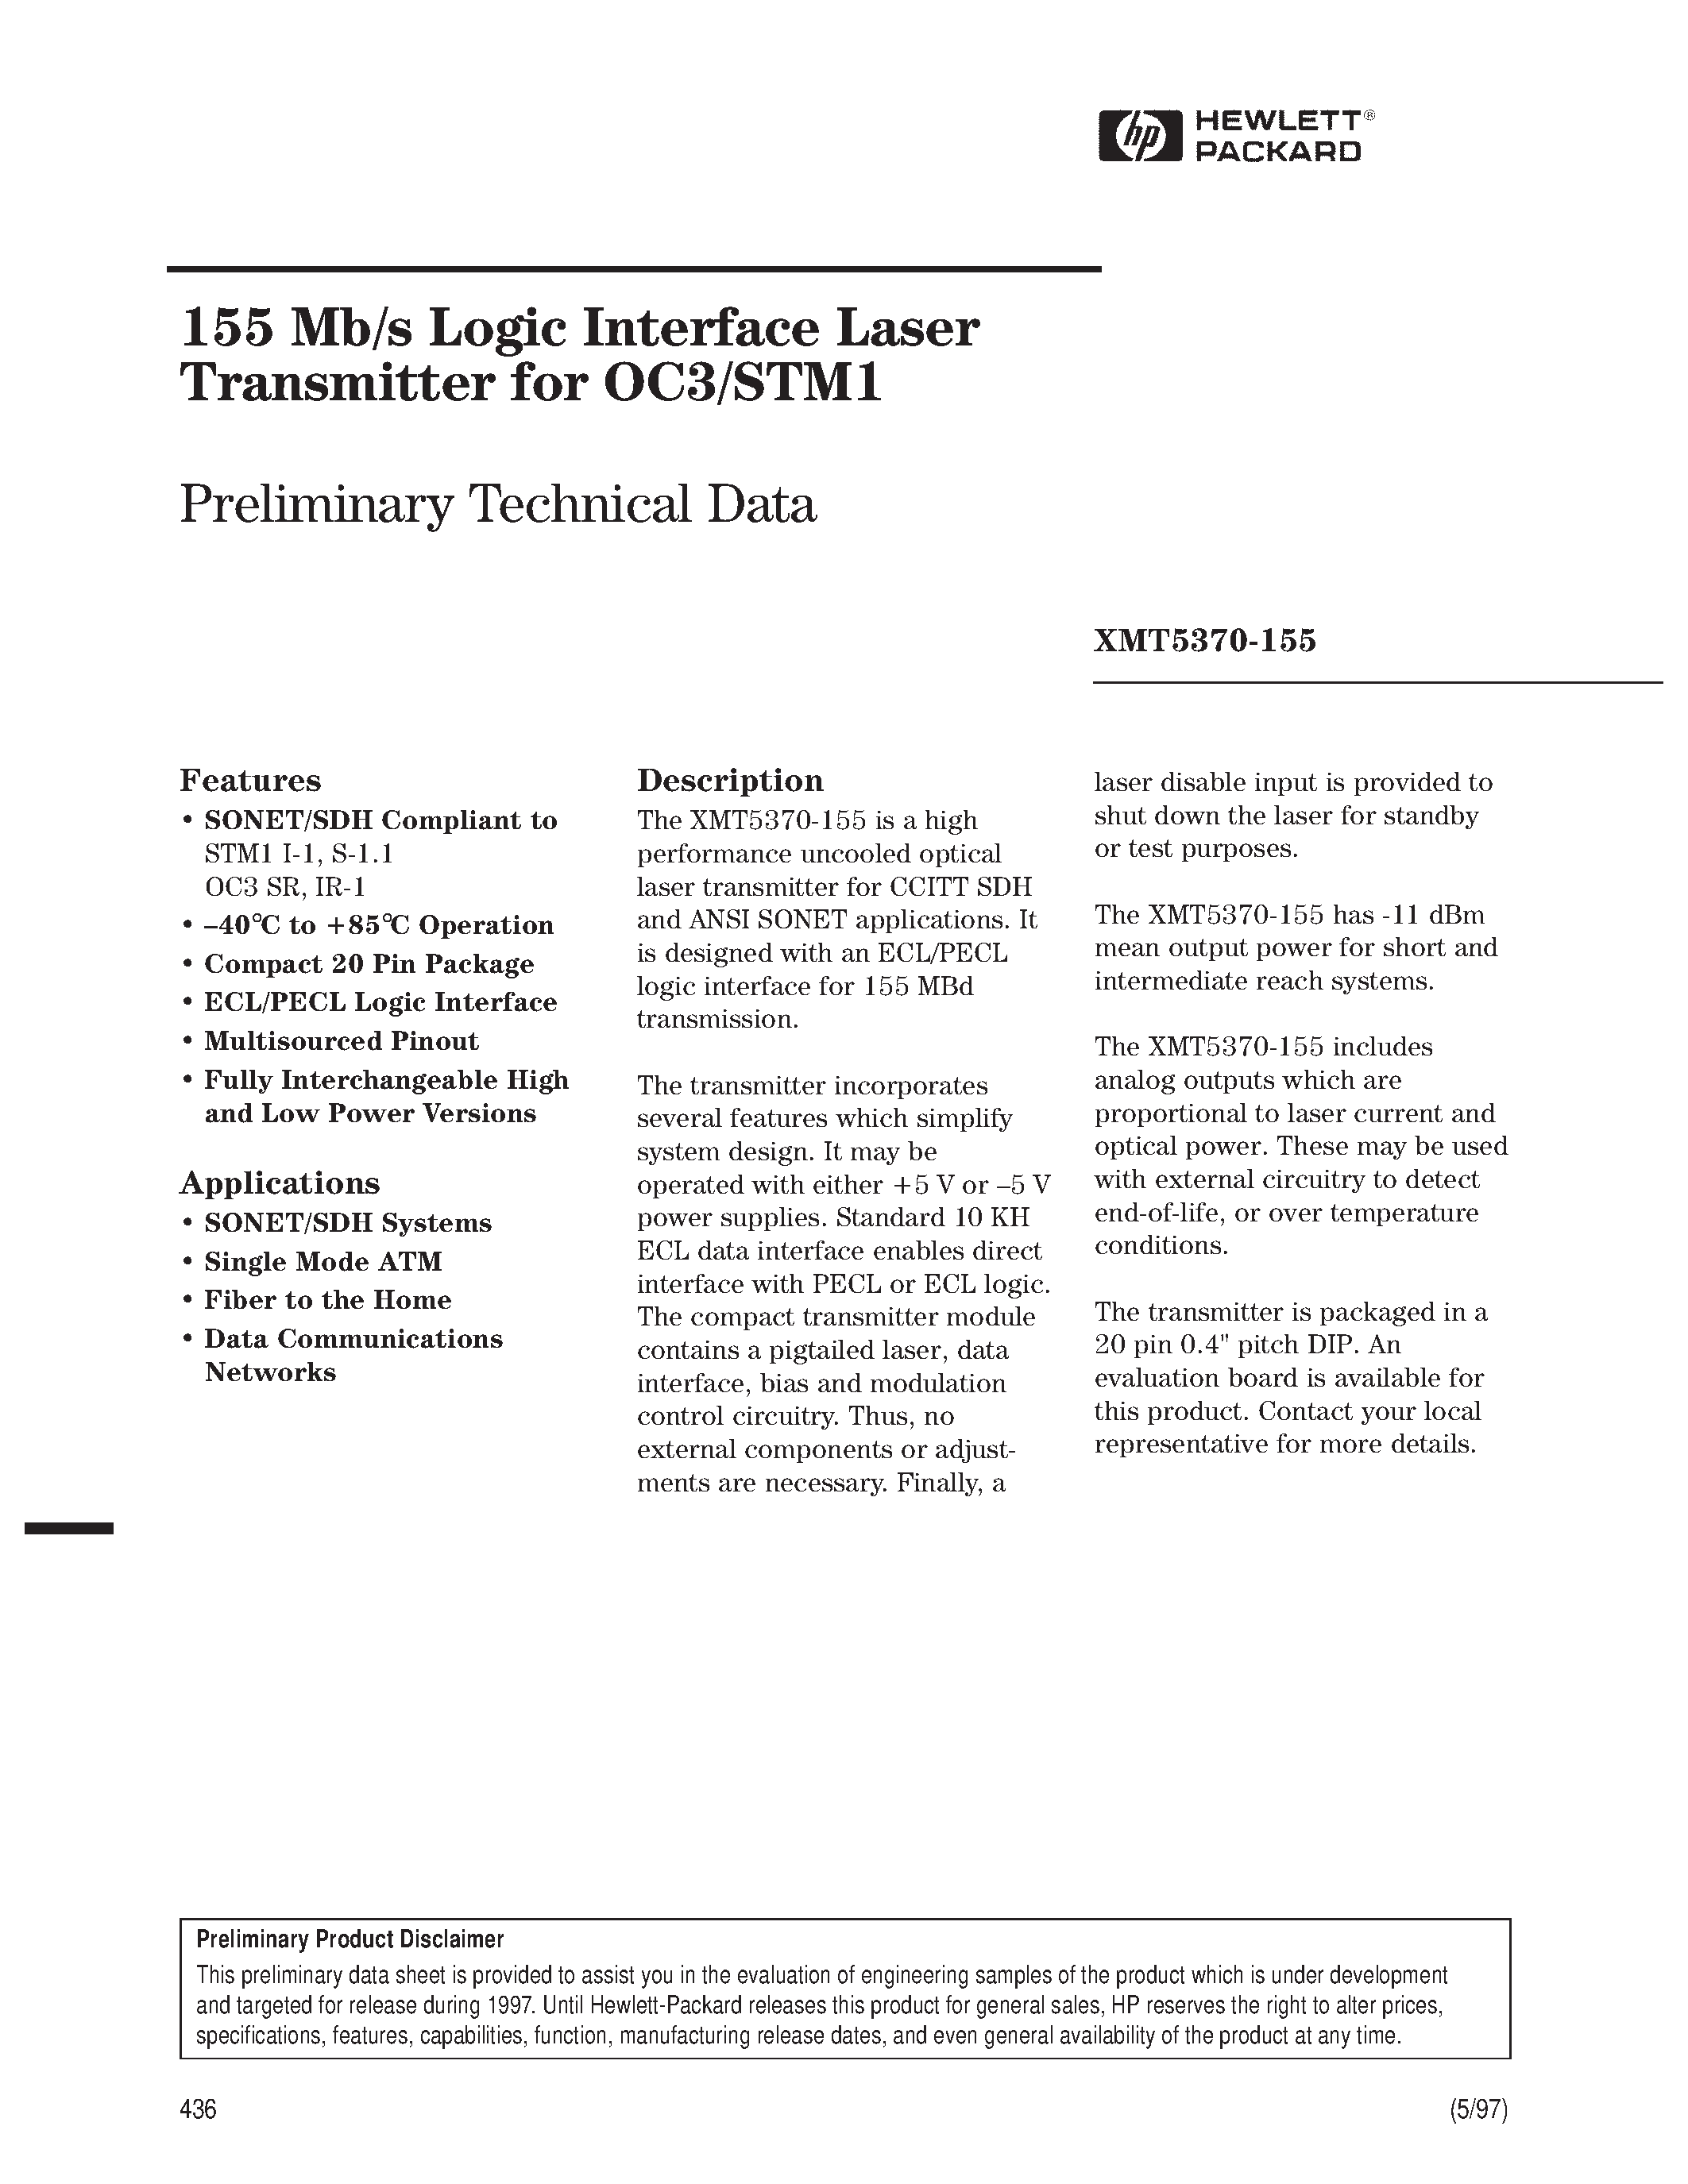 Datasheet XMT5370A-155-SC - 155 Mb/s Logic Interface Laser Transmitter for OC3/STM1 page 1